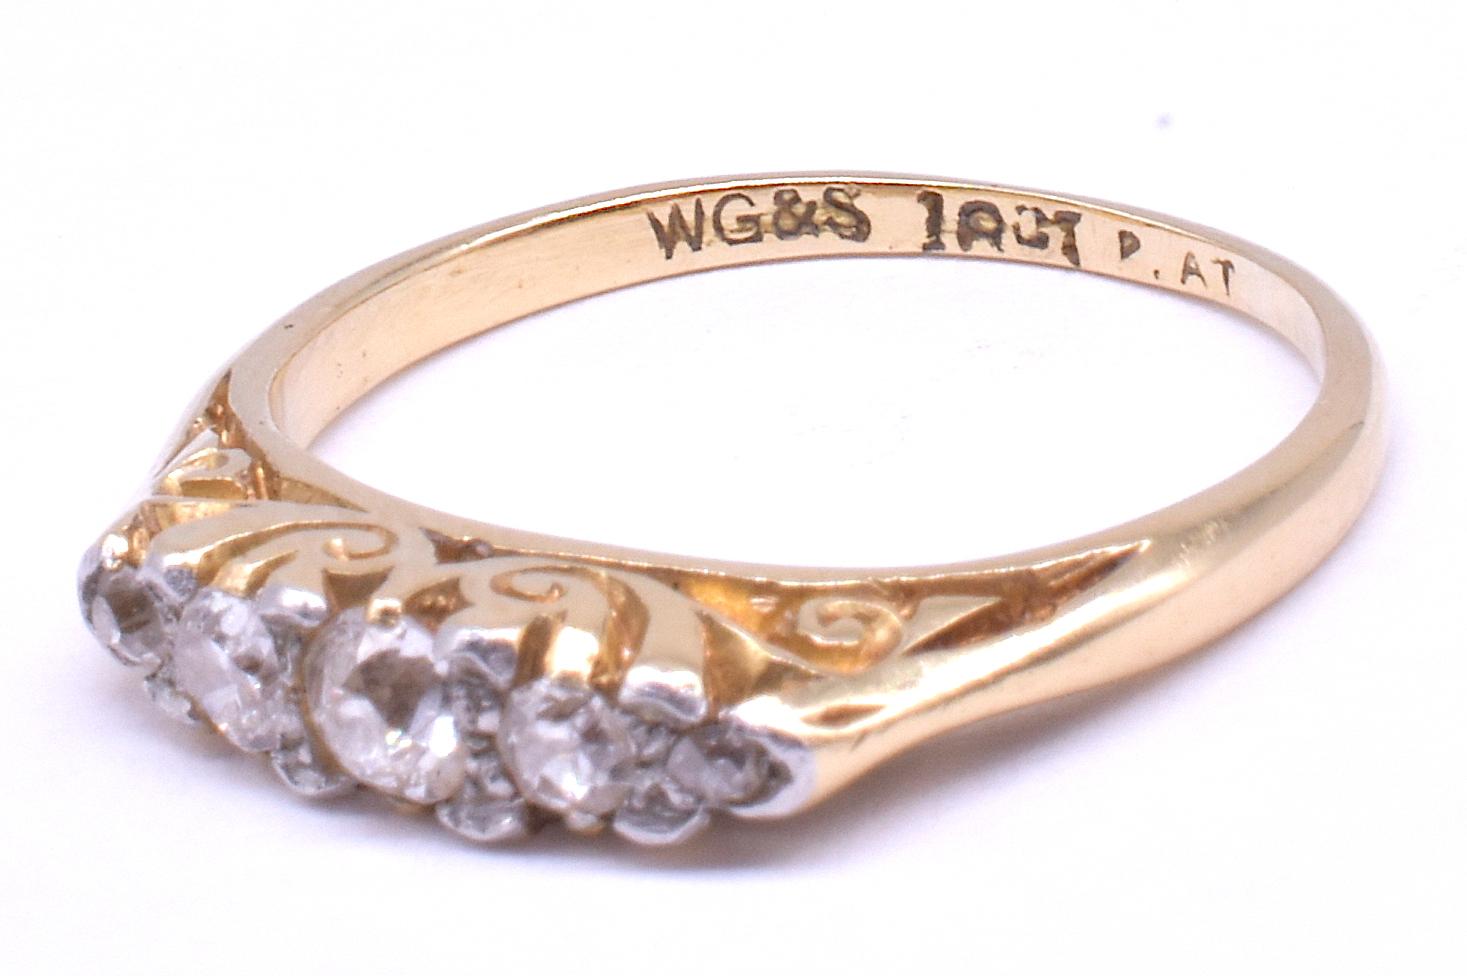 wg&s gold ring